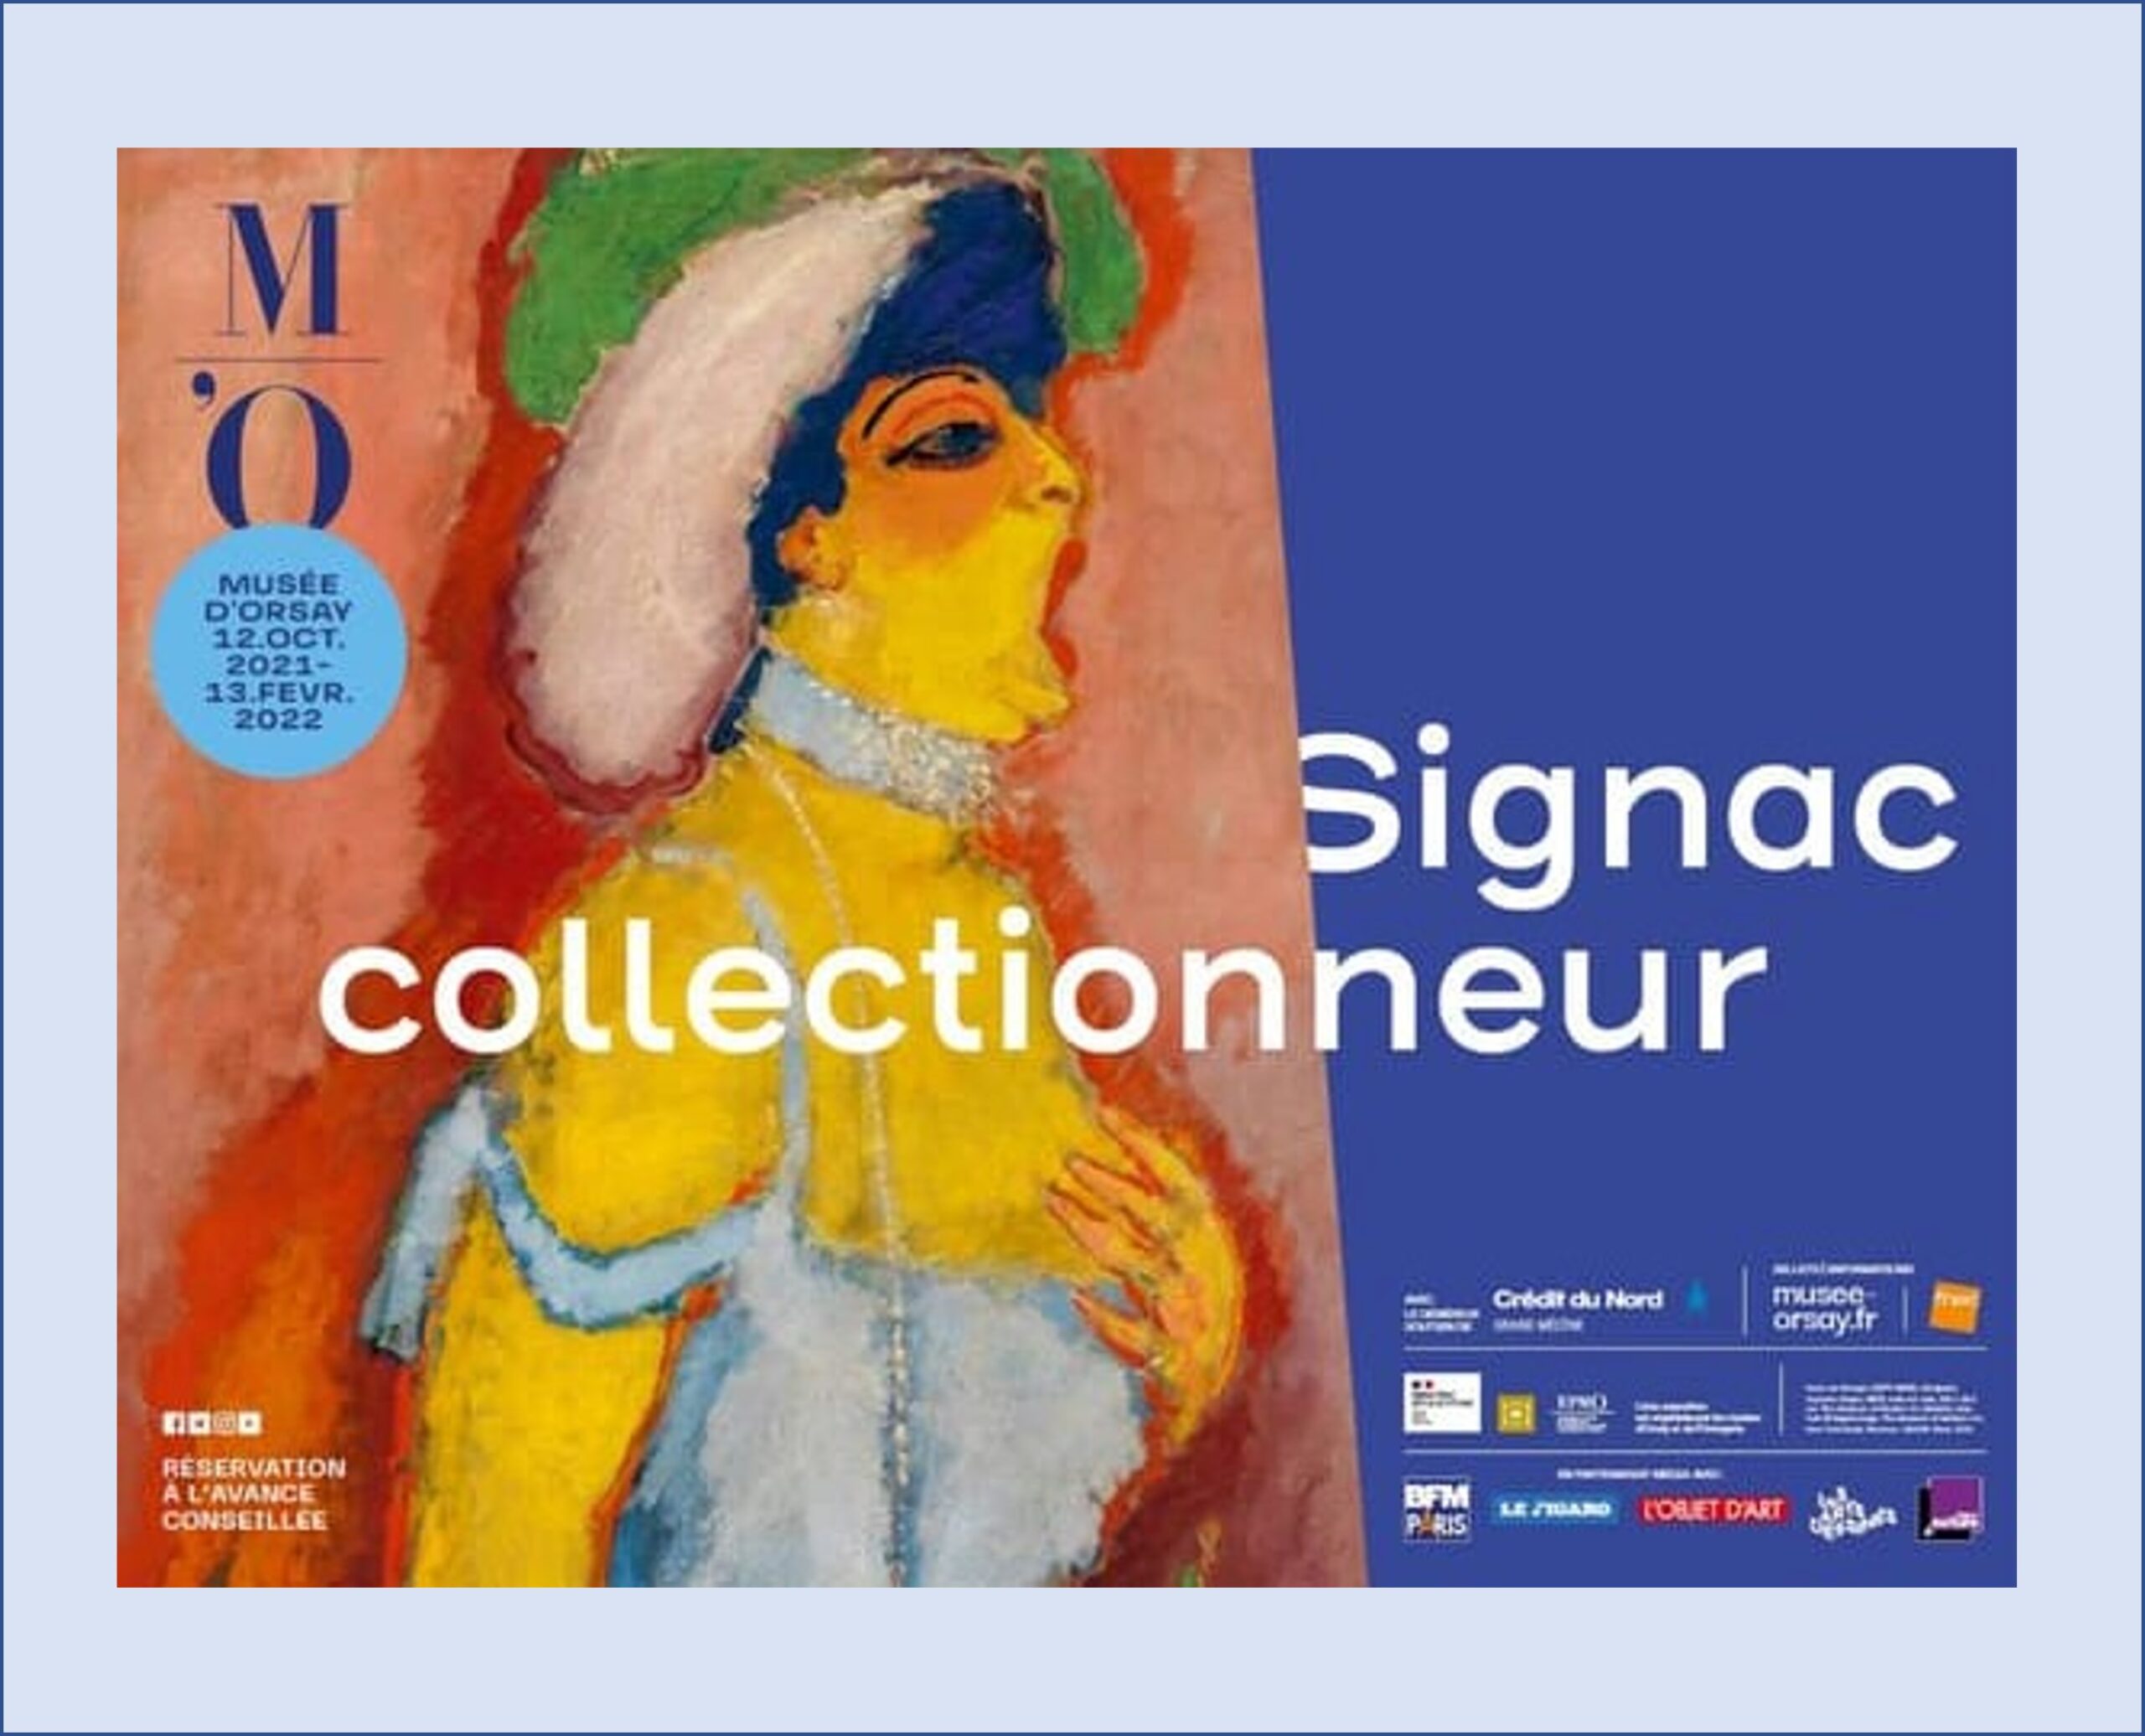 VISIO Expo Signac collectionneur – mercredi 9 mars 2022 à 18h30